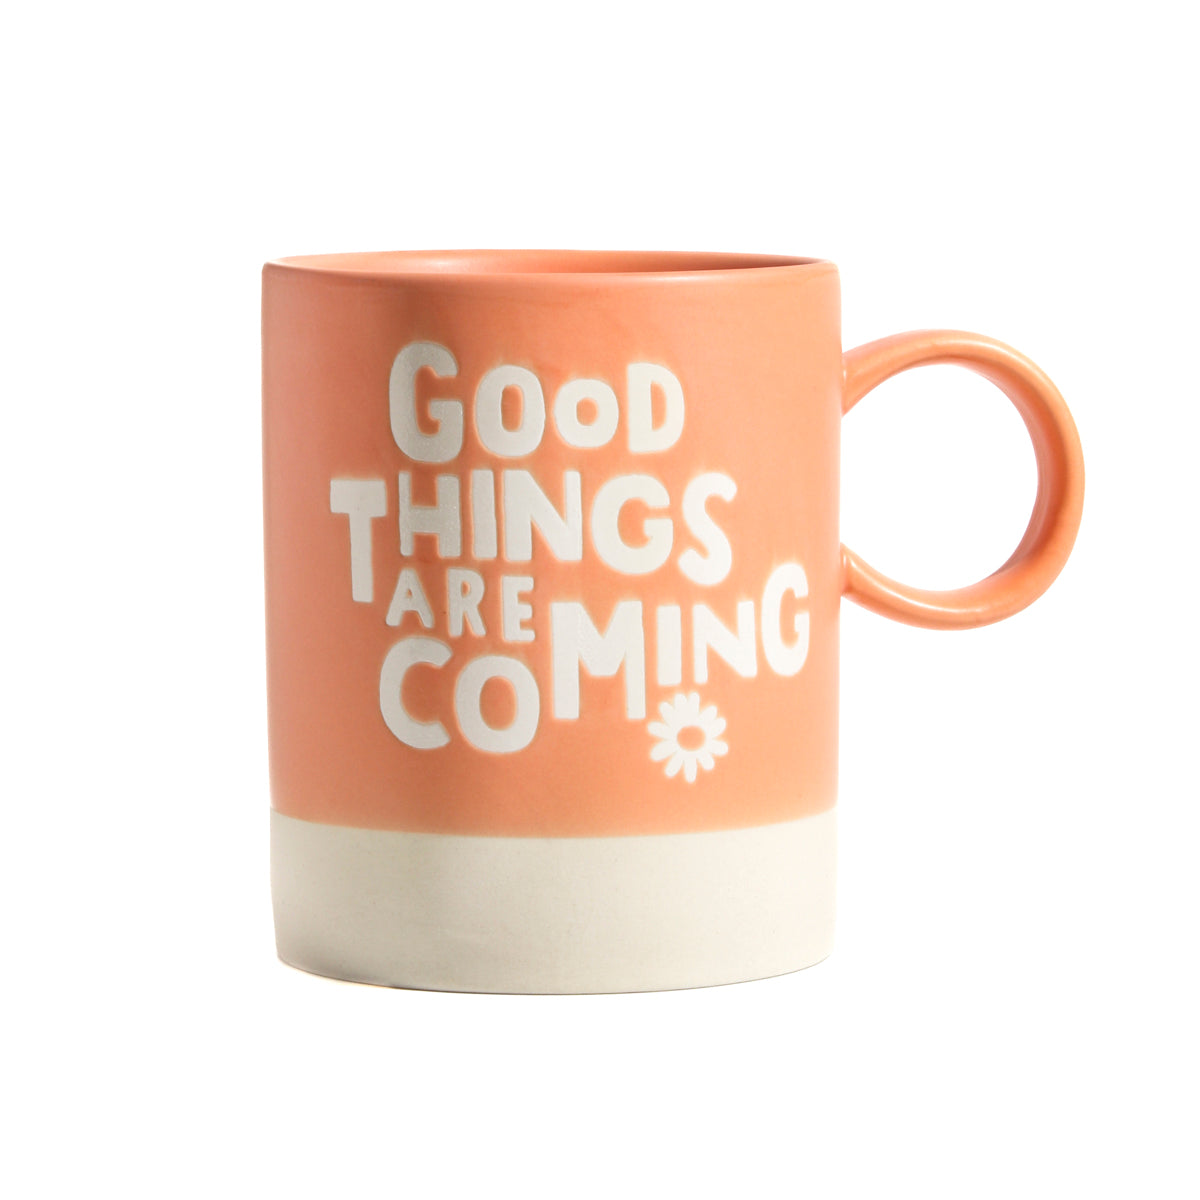 Good Things Are Coming Mug